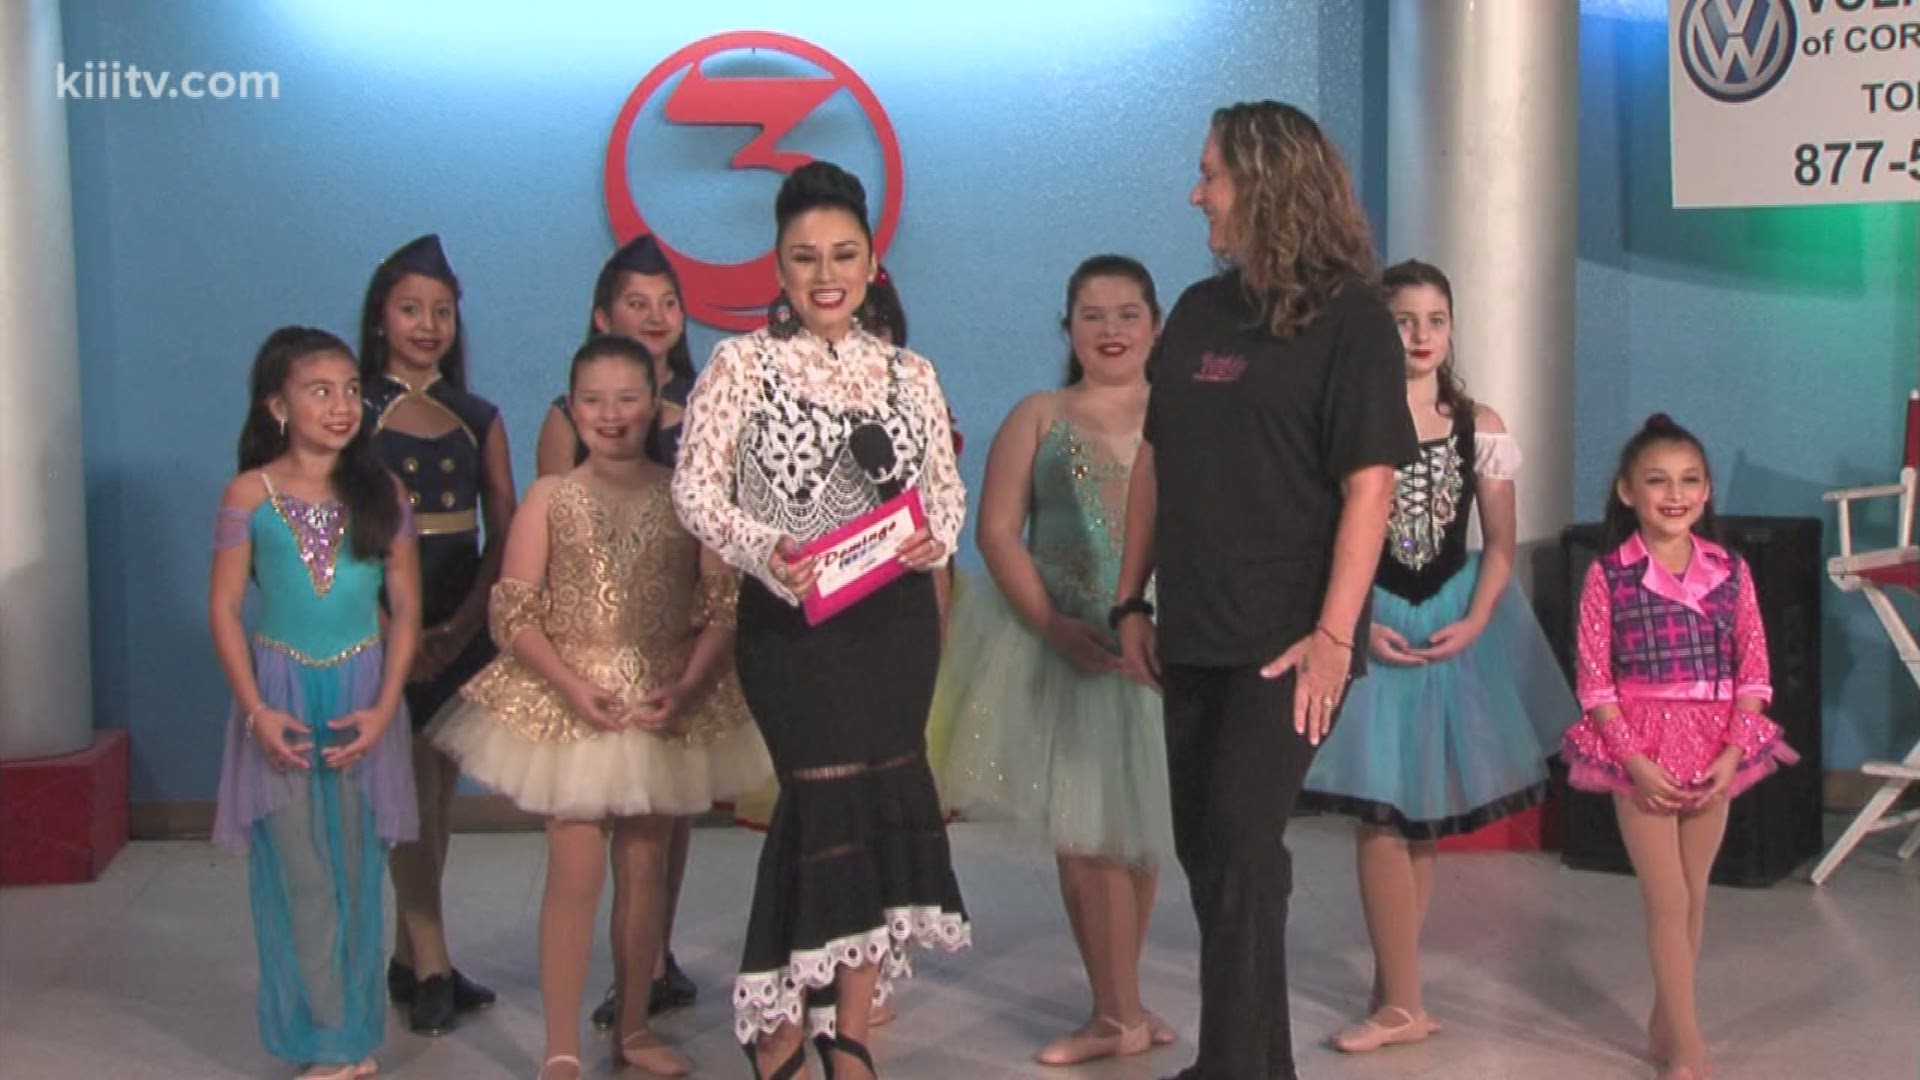 Barbie Leo Interviews The Cinderella School of Dance on Domingo Live!